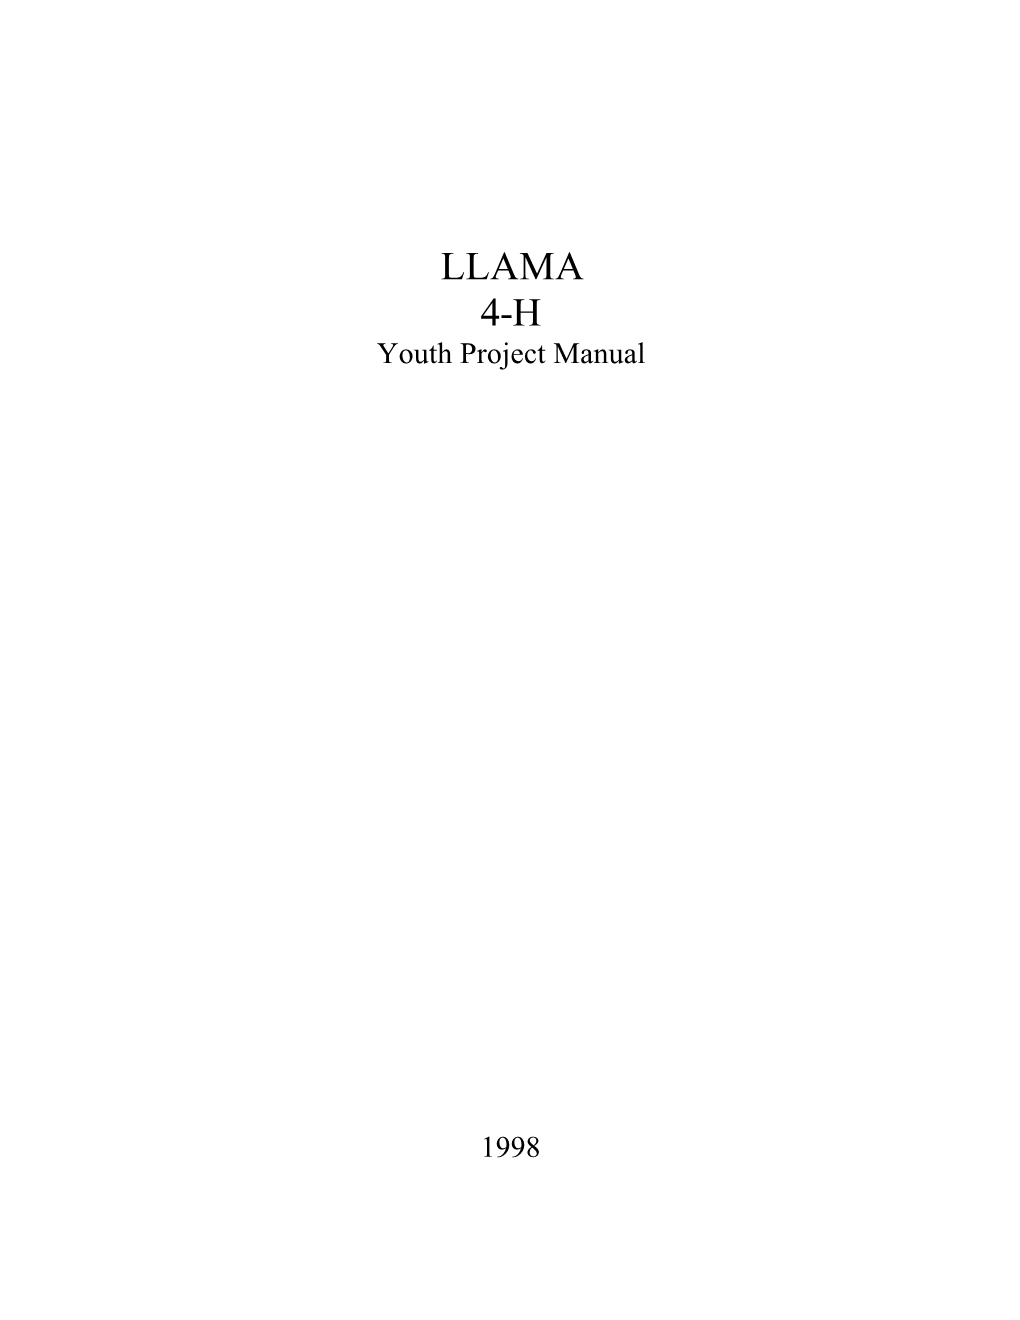 LLAMA 4-H Youth Project Manual